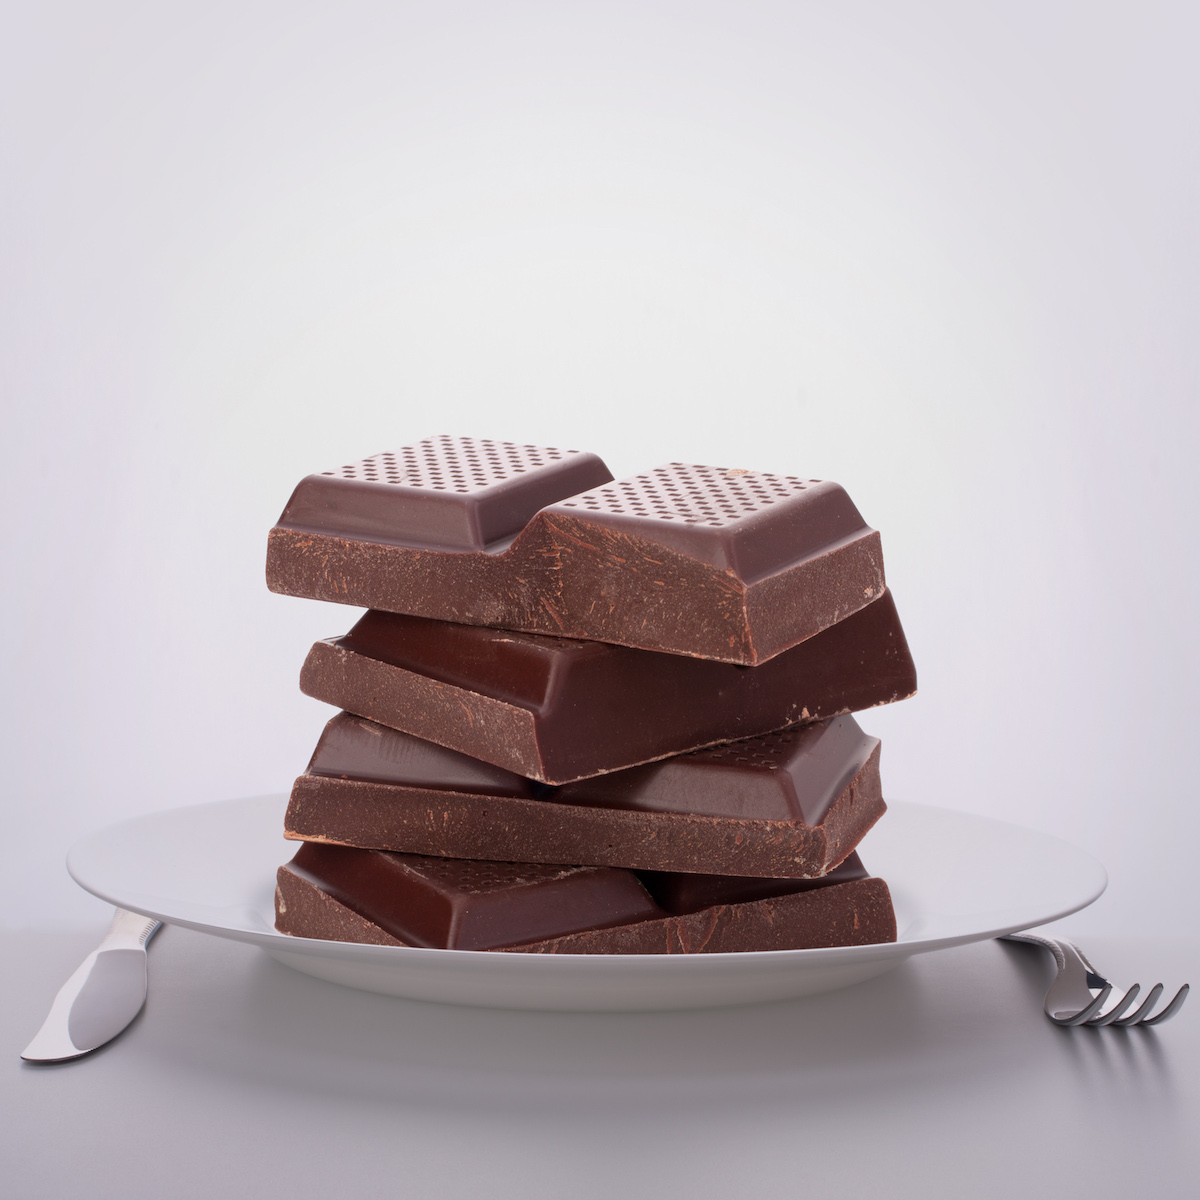 Chocolateros.net: Where Chocolate Enthusiasts’ Dreams Come True